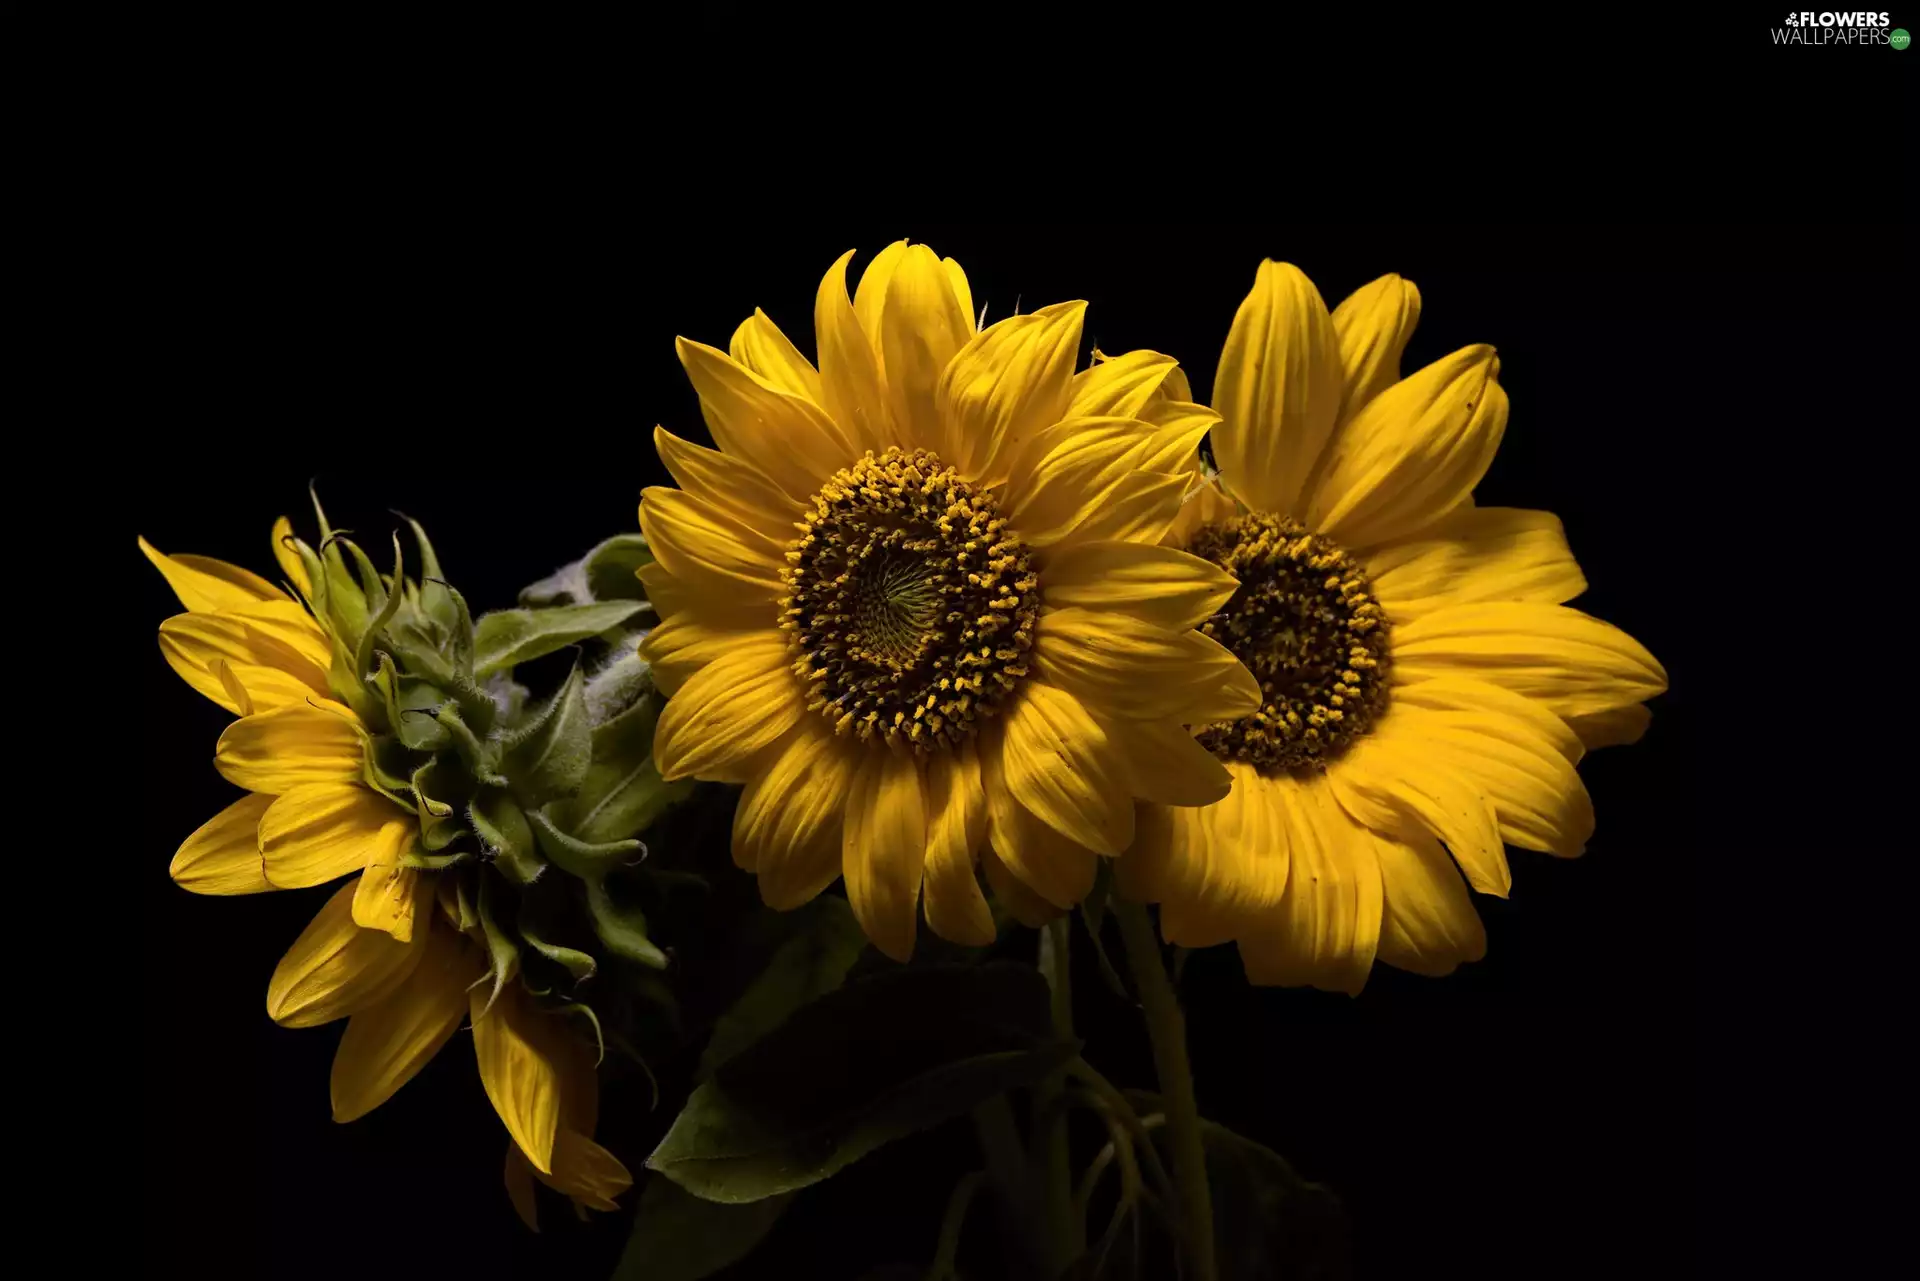 Three, Black, background, decorative Sunflowers